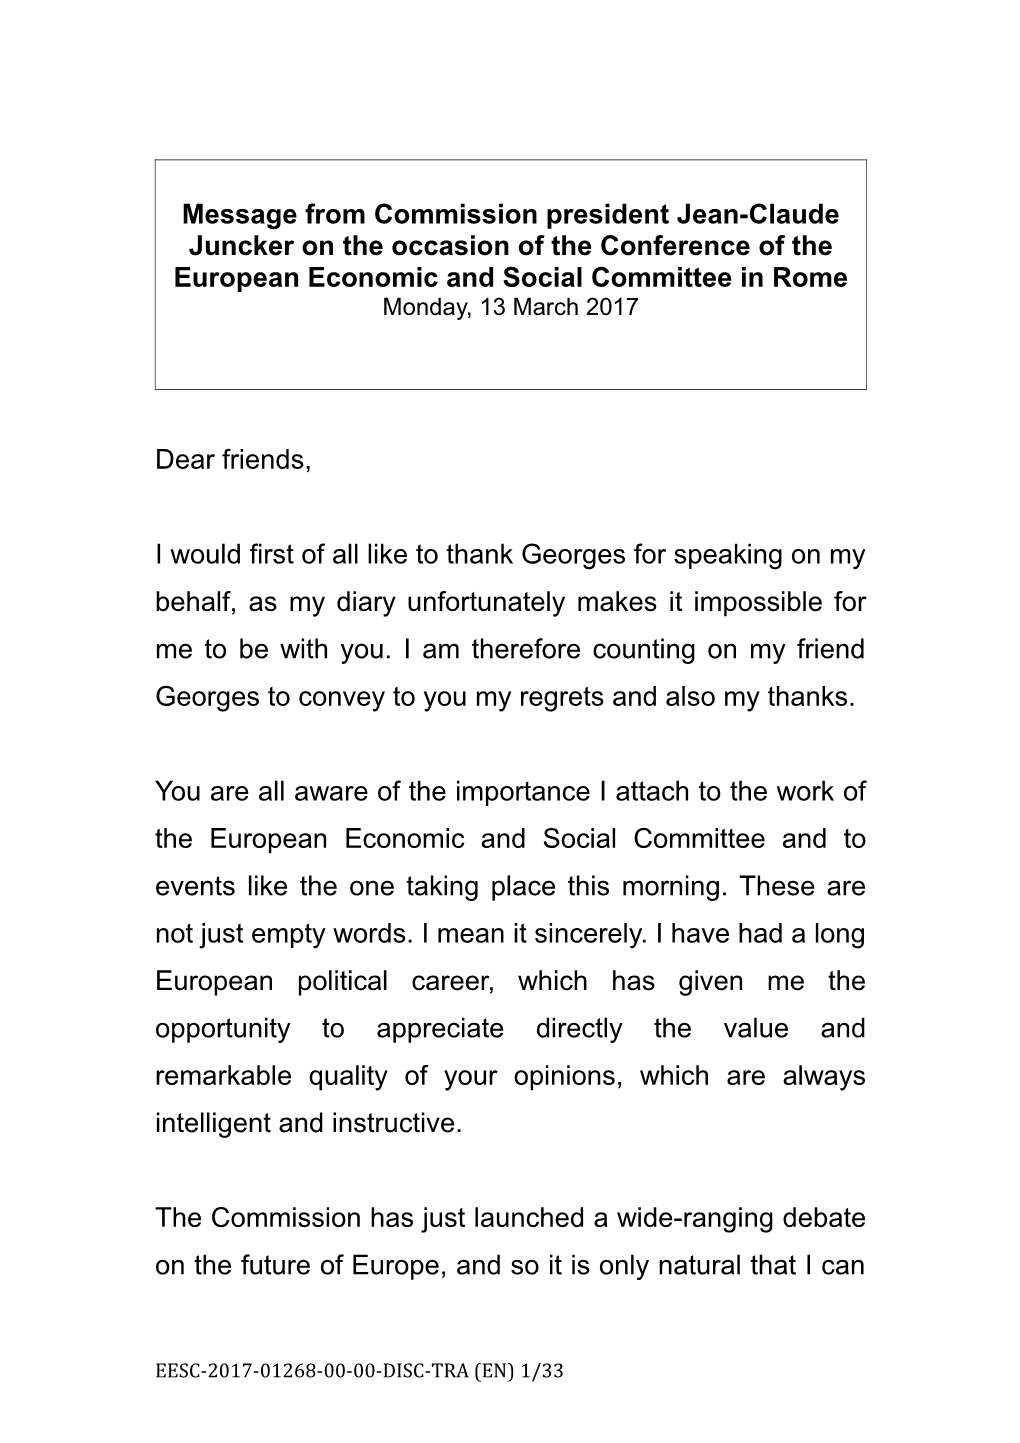 Message from Jean-Claude Juncker - Rome